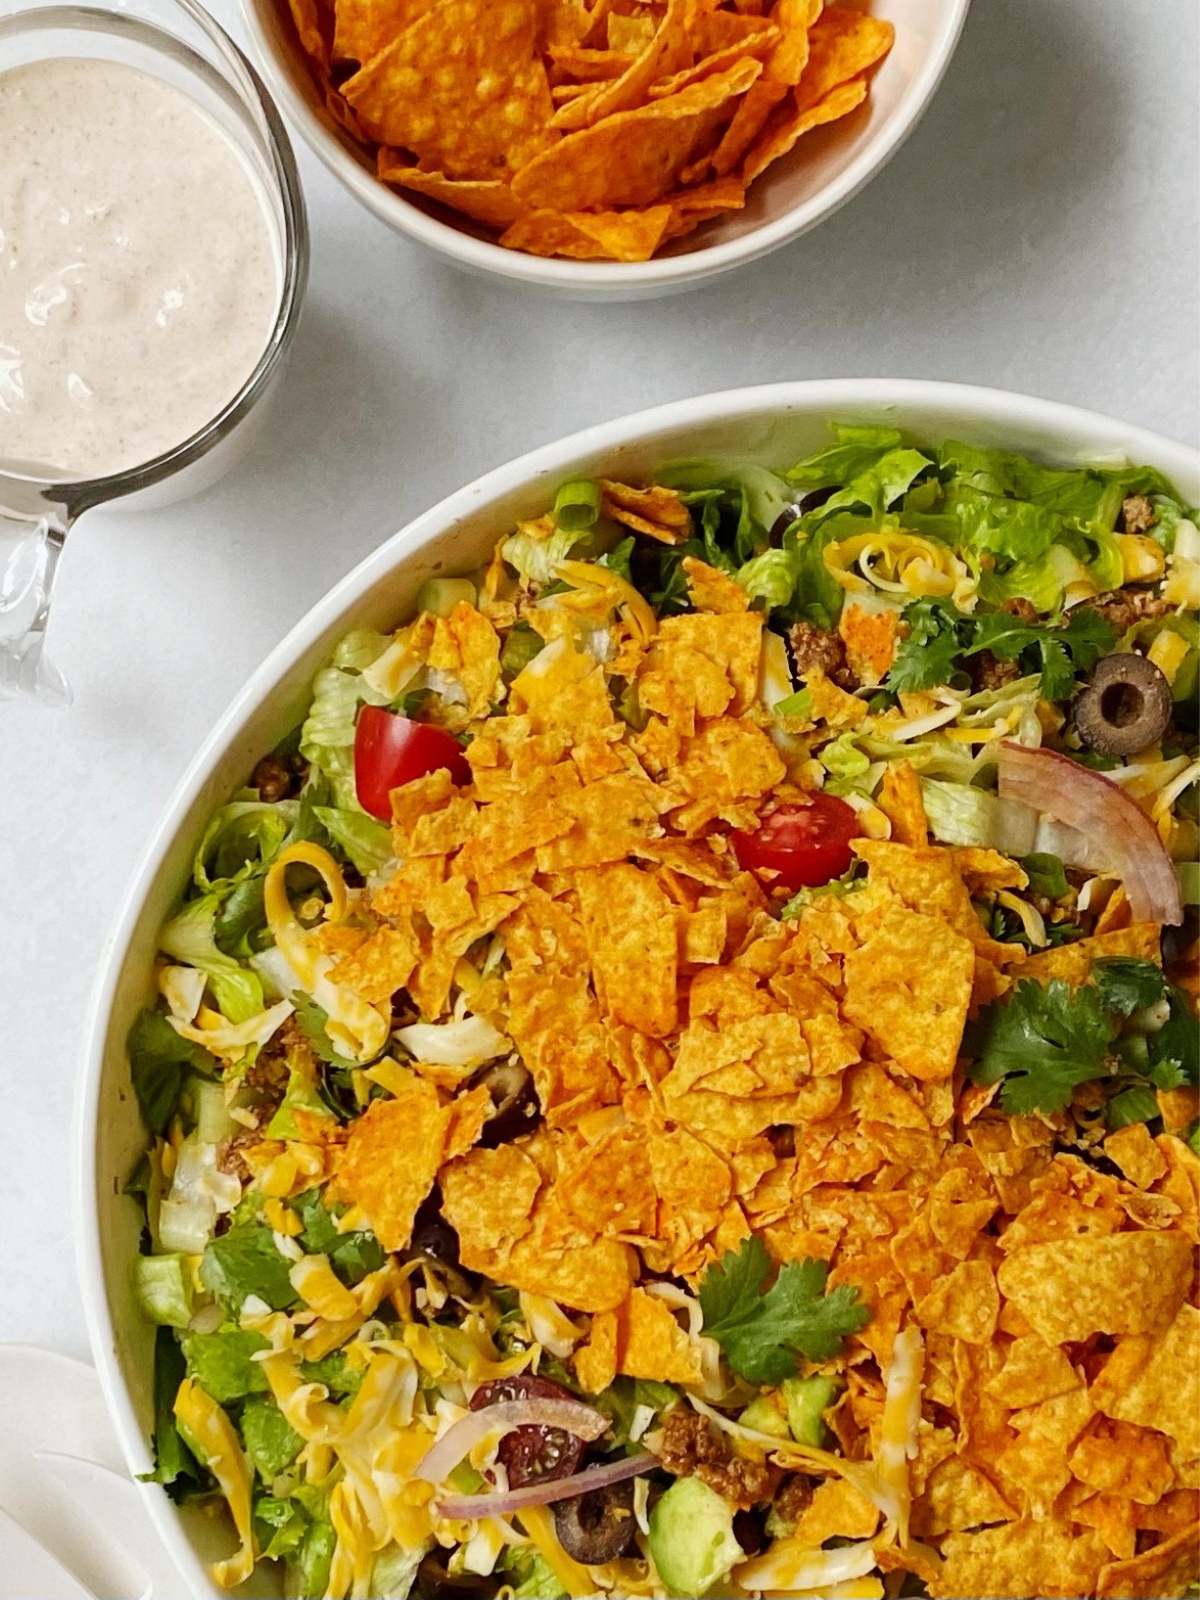 Large serving bowl of Doritos taco salad next to a pitcher of dressing and bowl of Doritos.